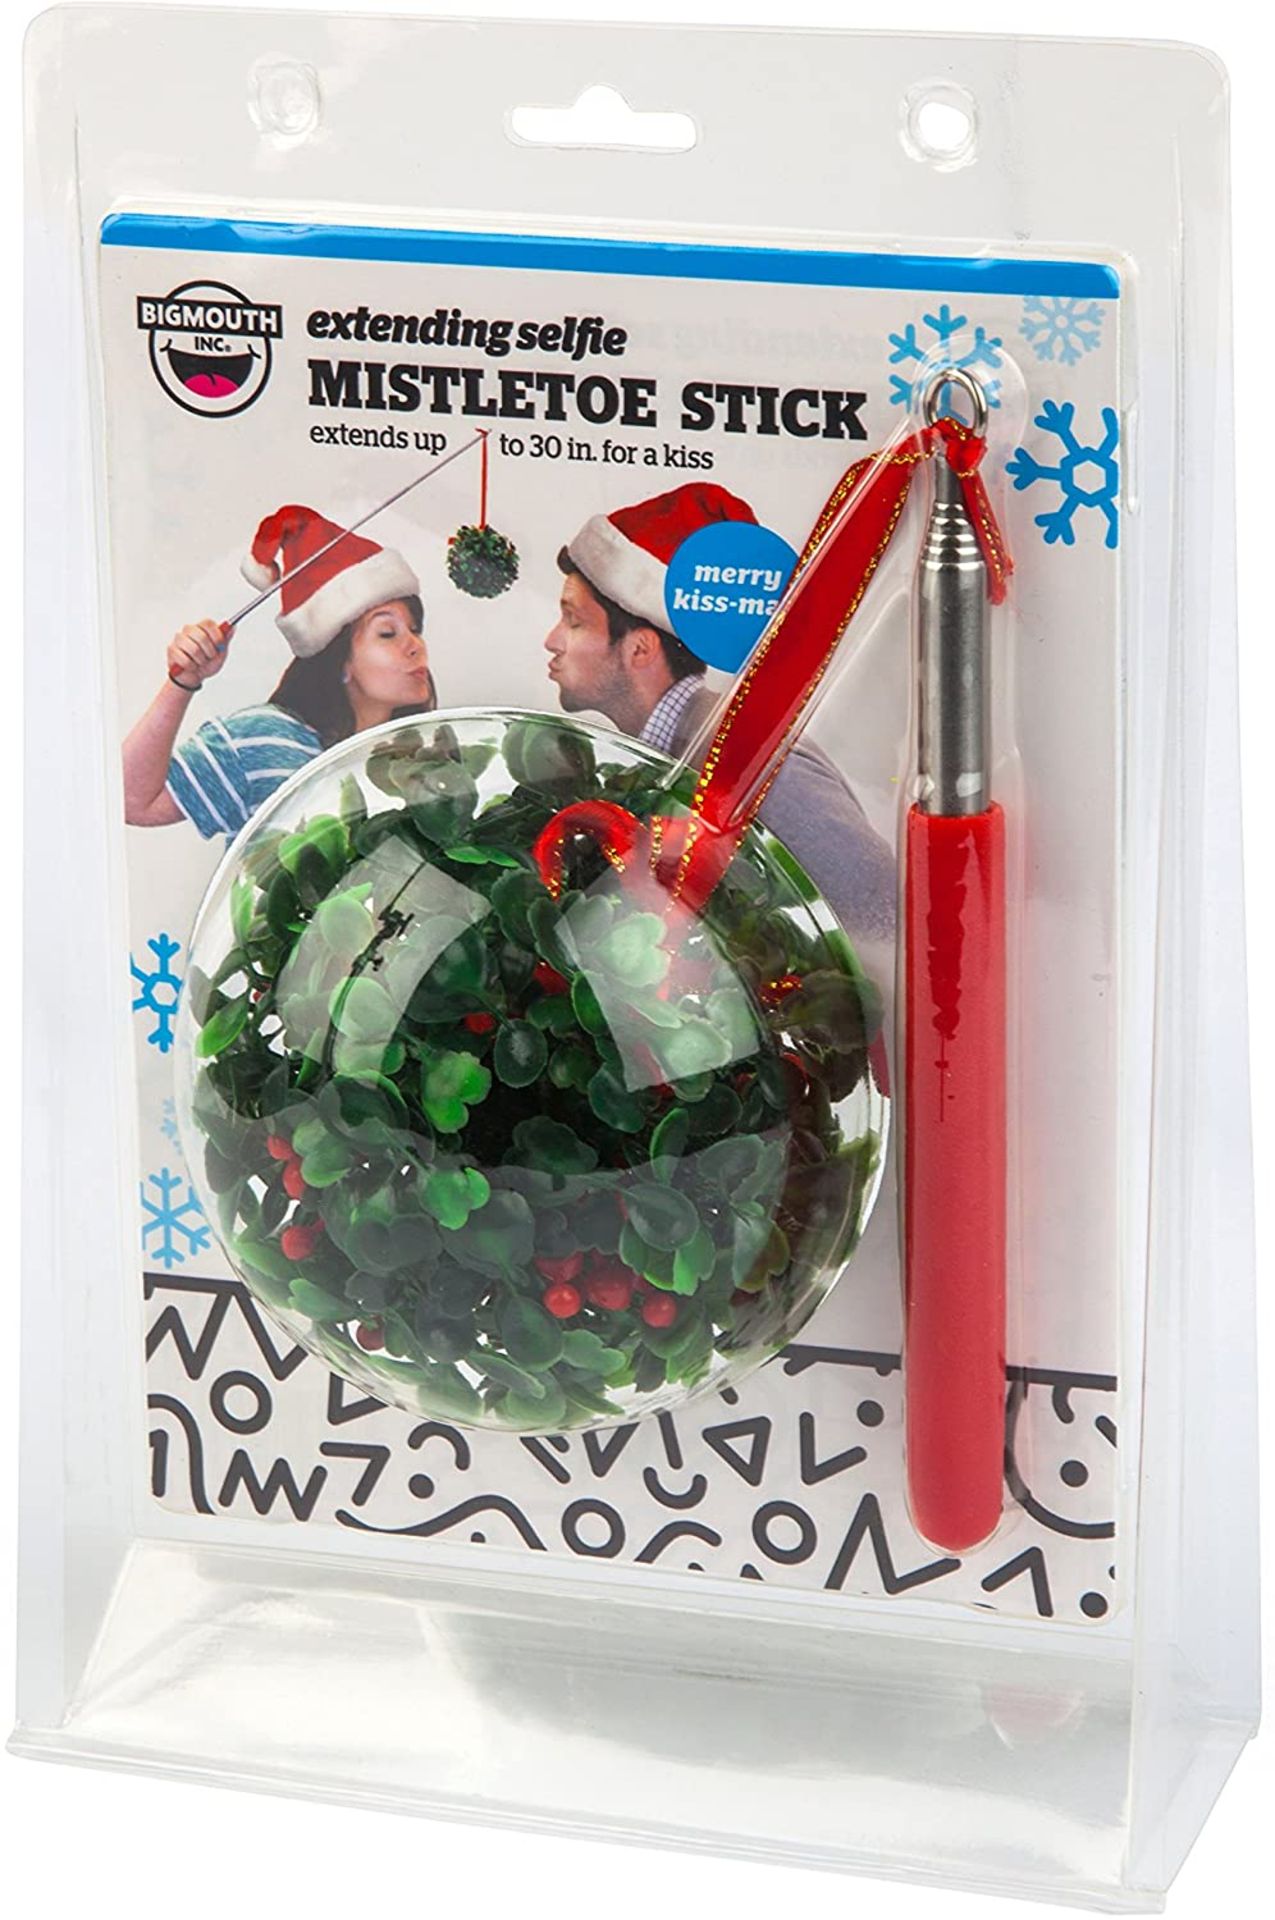 24 x New Packaged Big Mouth Inc The Mistletoe Extending Selfie Stick . RRP £15 each (row18)